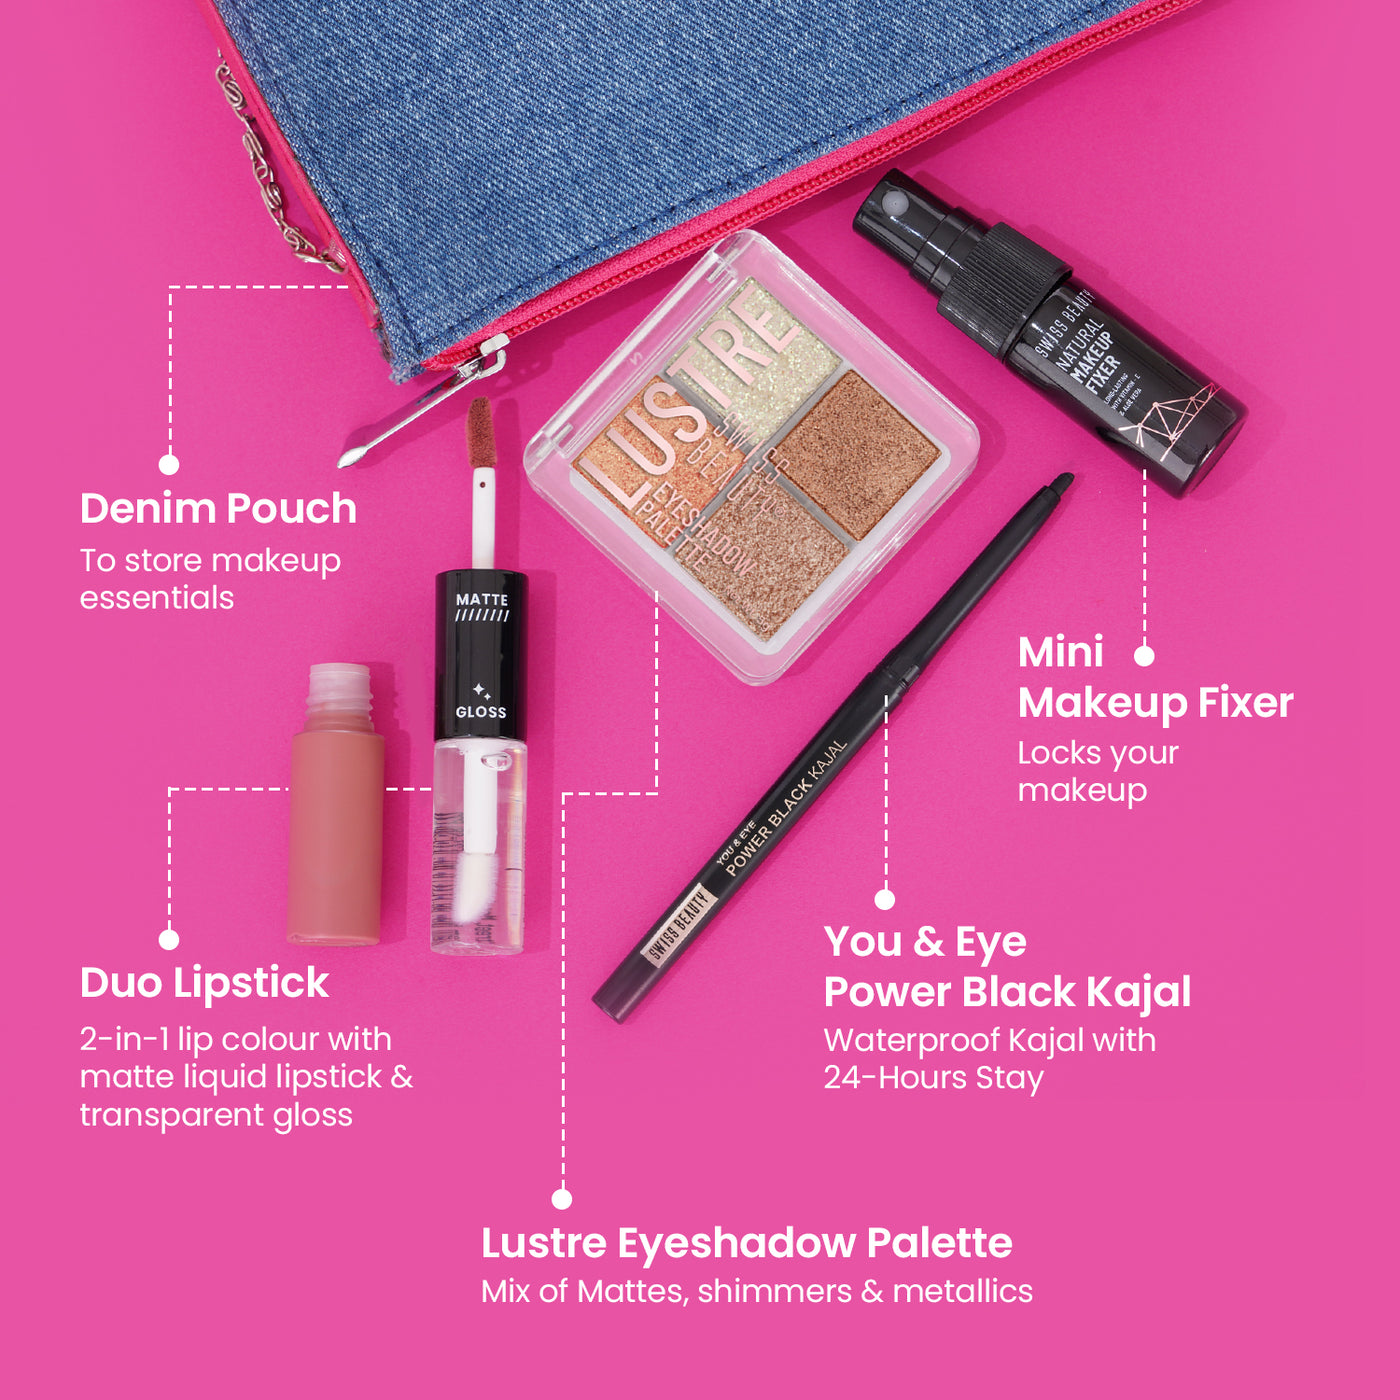 Easy-To-Do Makeup kit